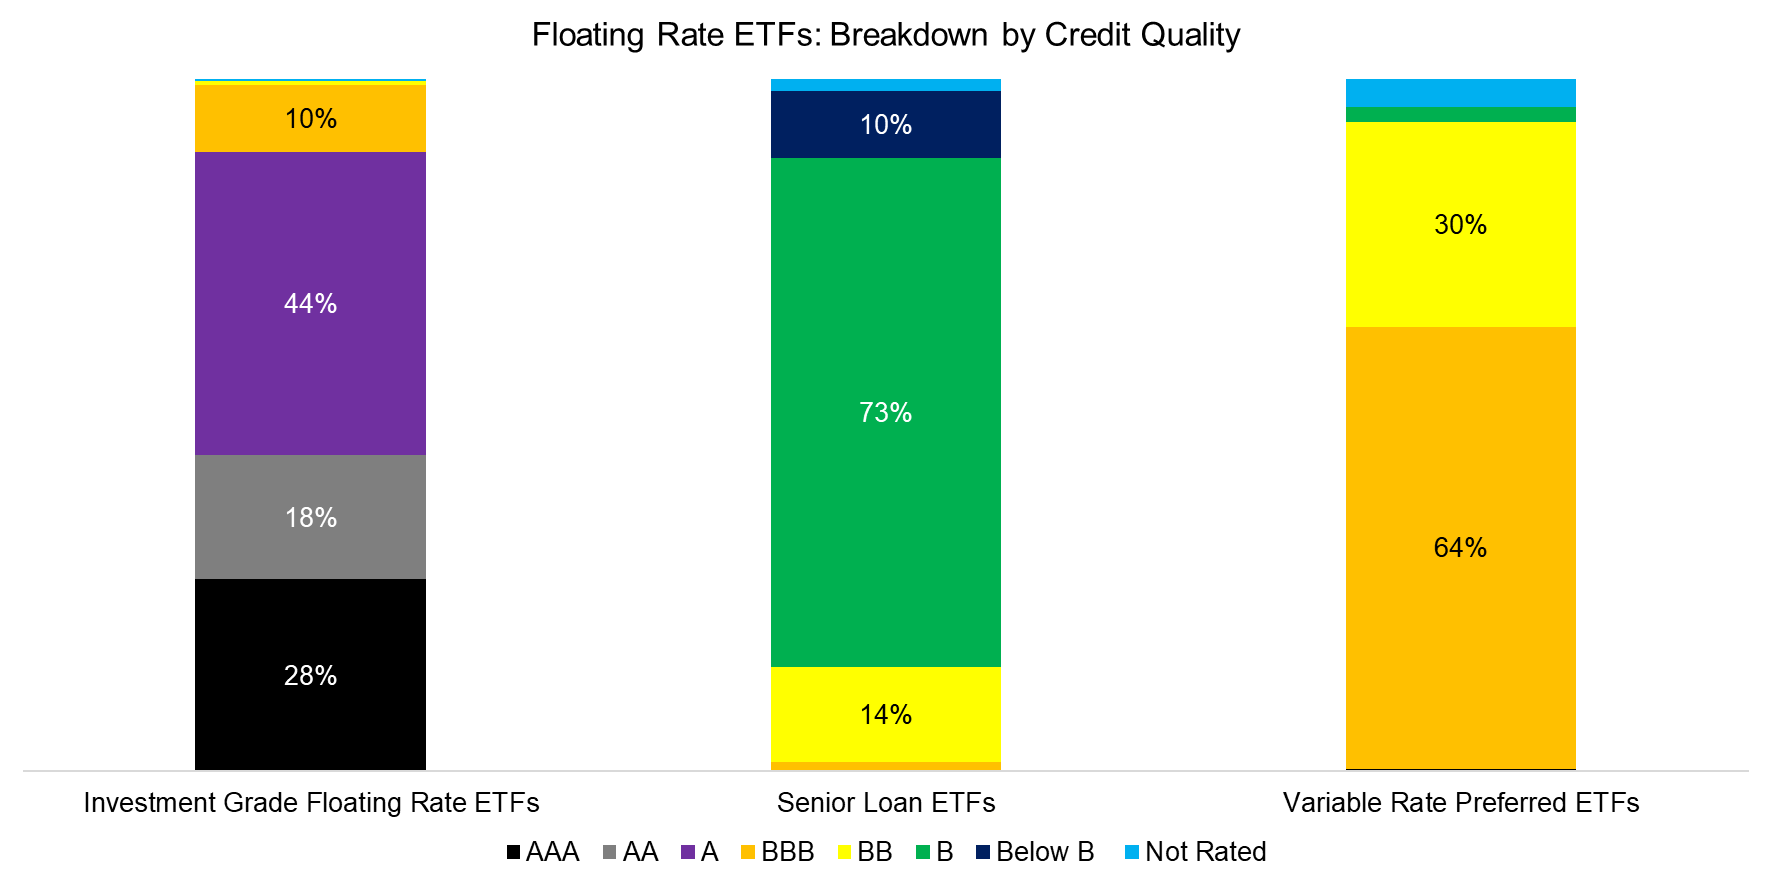 Floating Rate ETFs Breakdown by Credit Quality